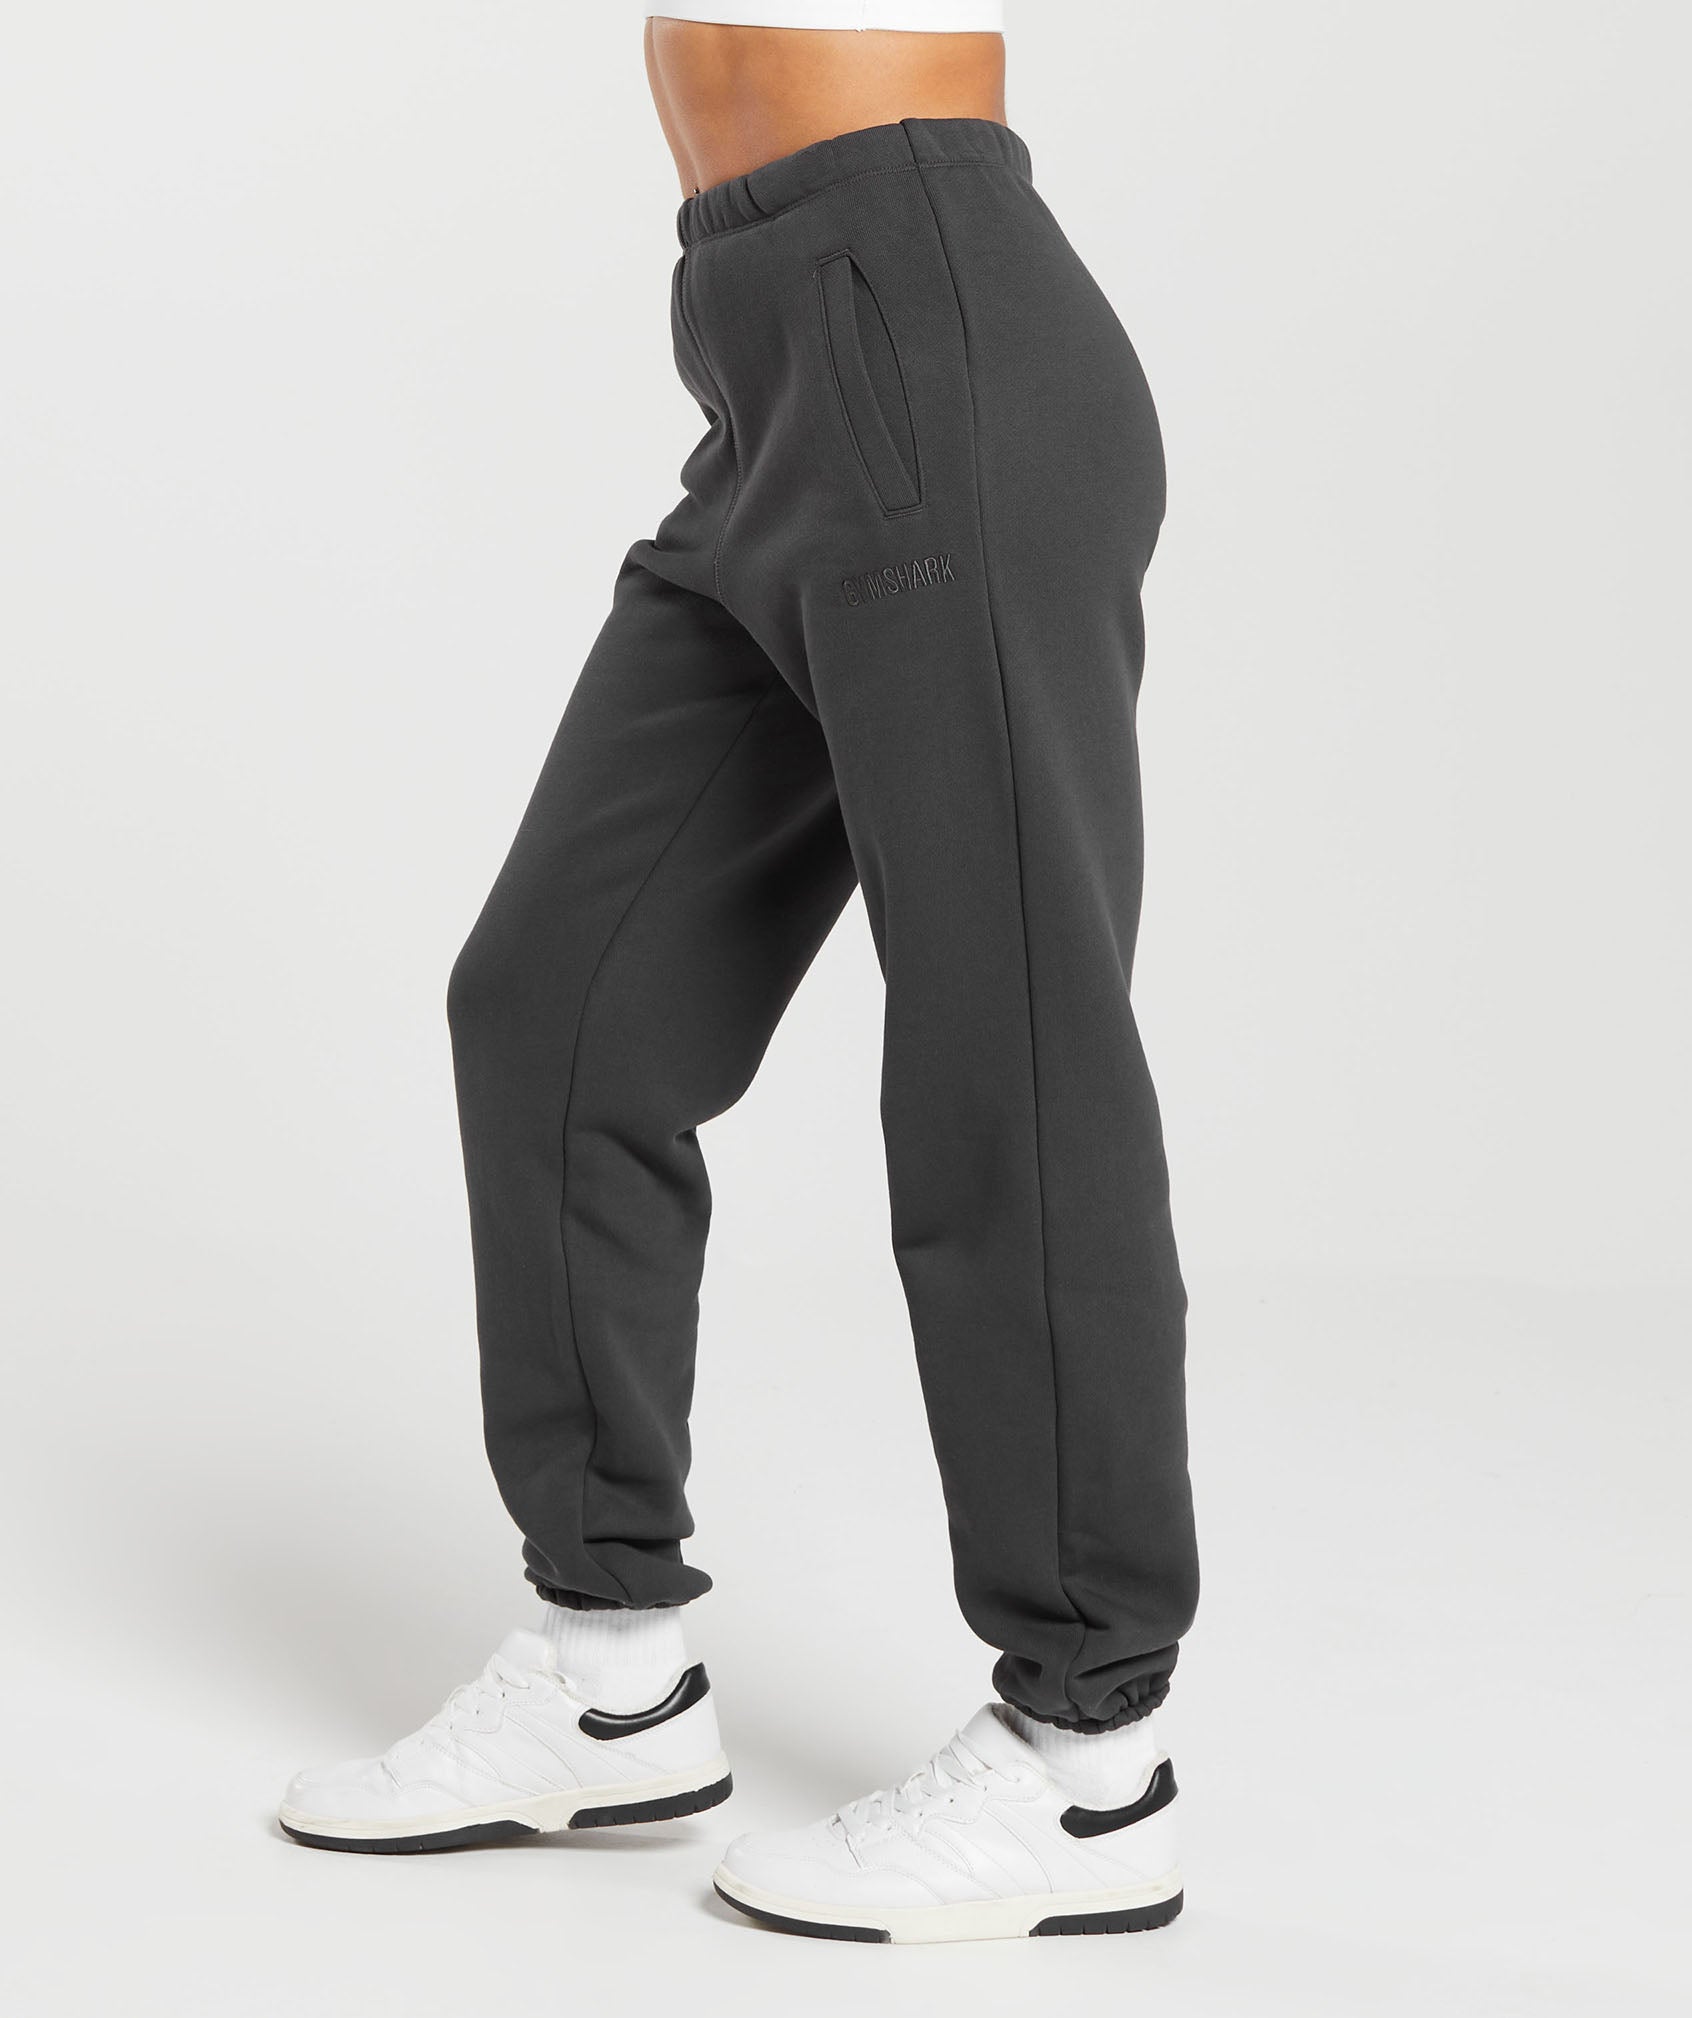 Gymshark Joggers Mens Small Gray Tapered Fleece Sweatpants Pant Back Snap  Pocket